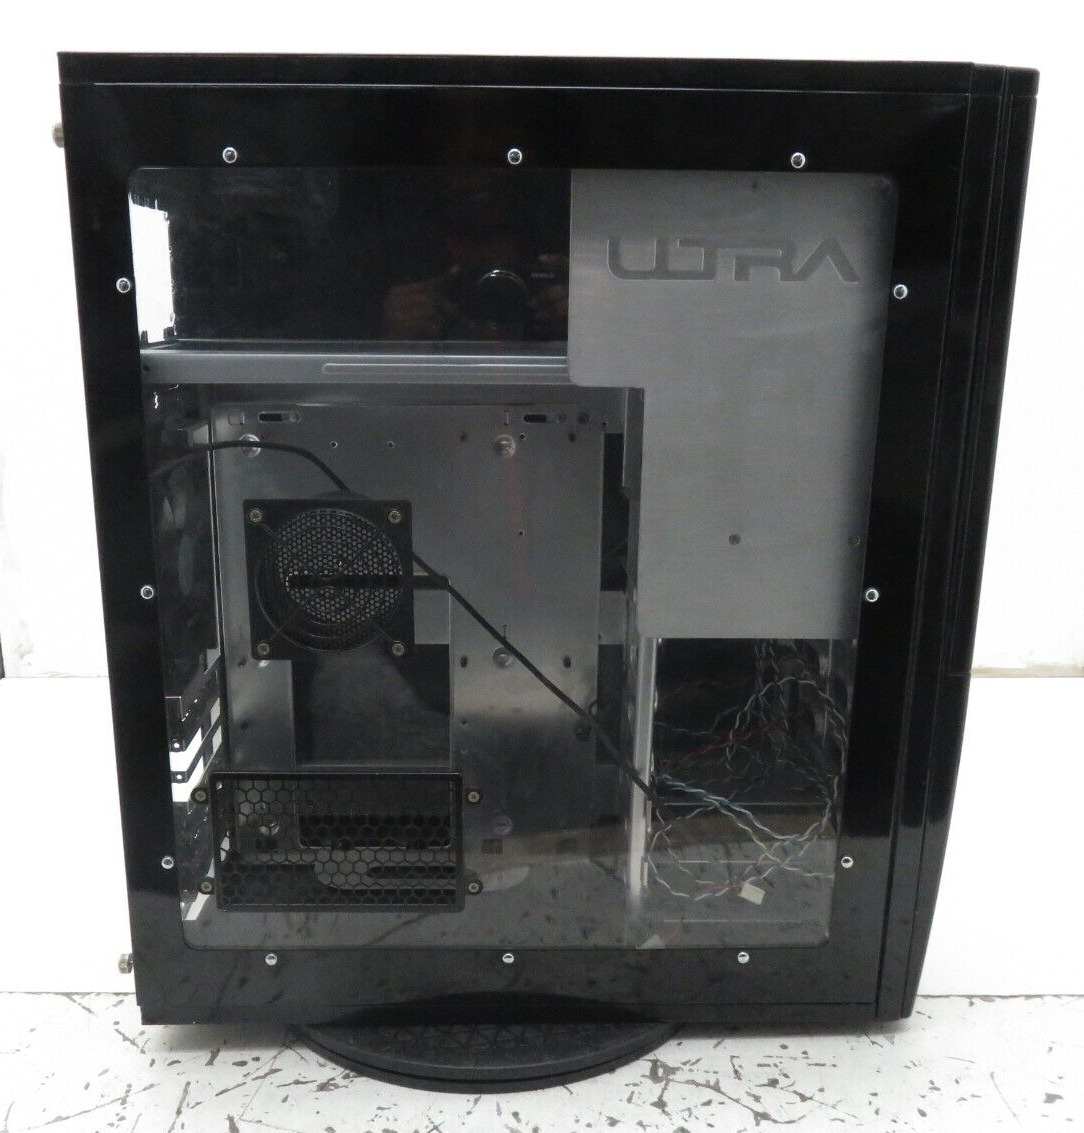 Ultra Aluminus Retro Computer Case ATX Gaming Tower -Antec Clone/Lookalike